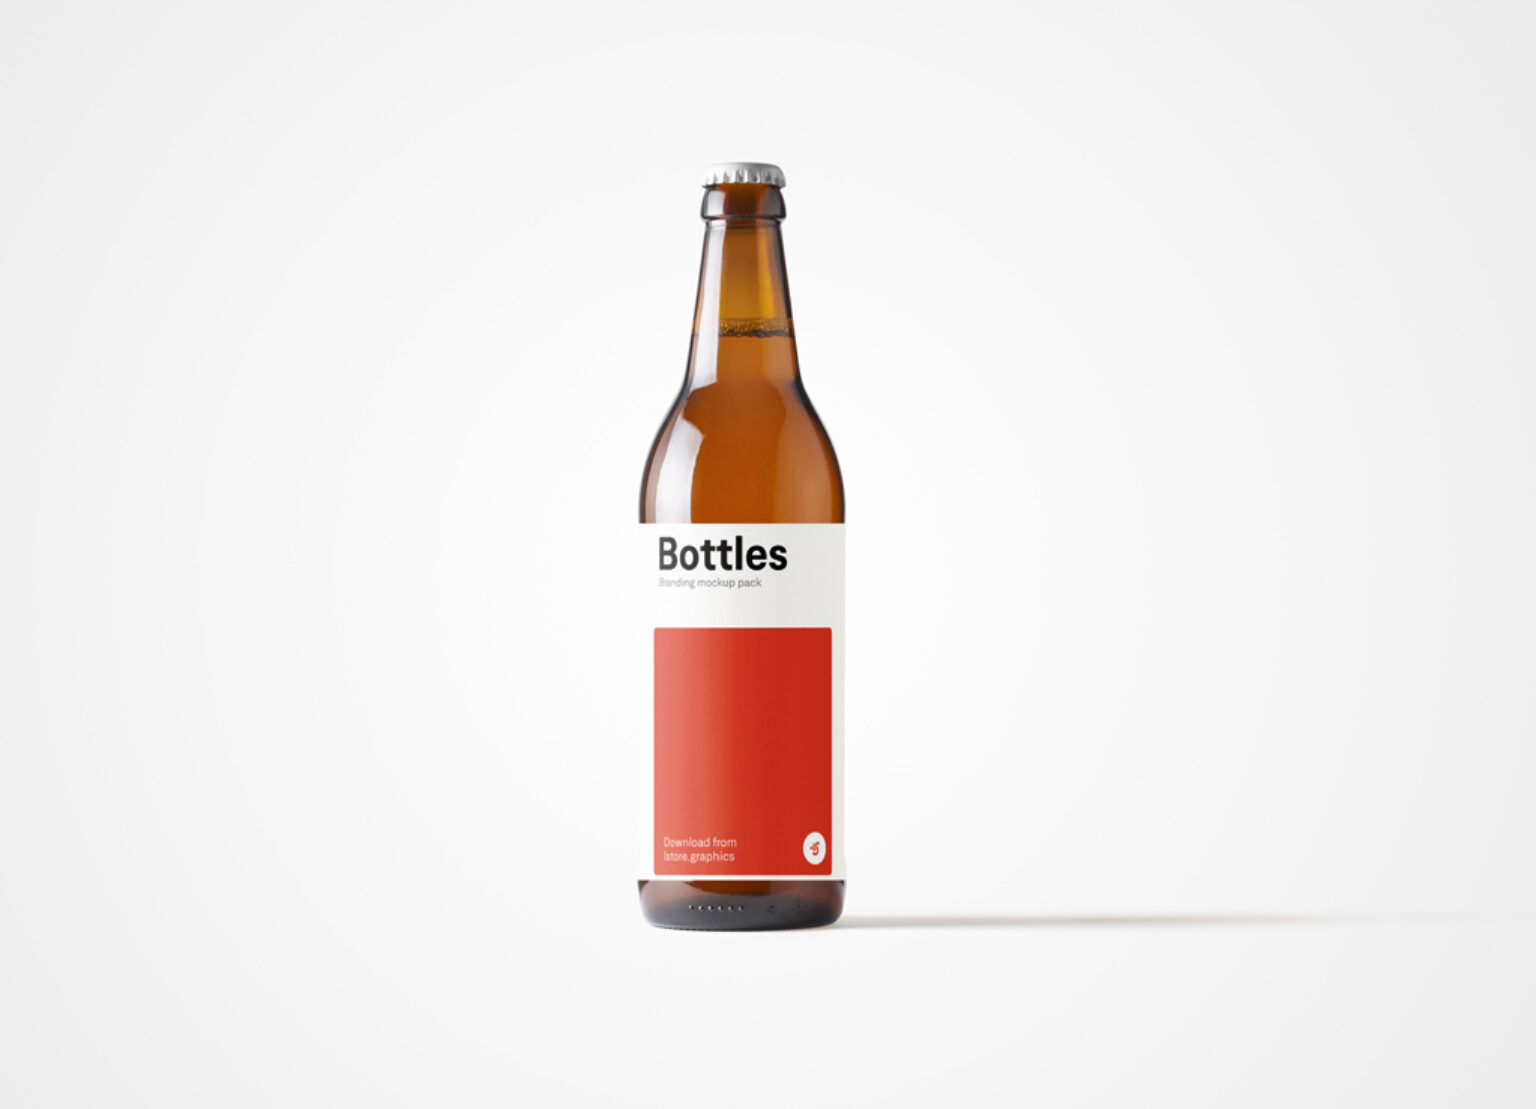 beer bottle photoshop download